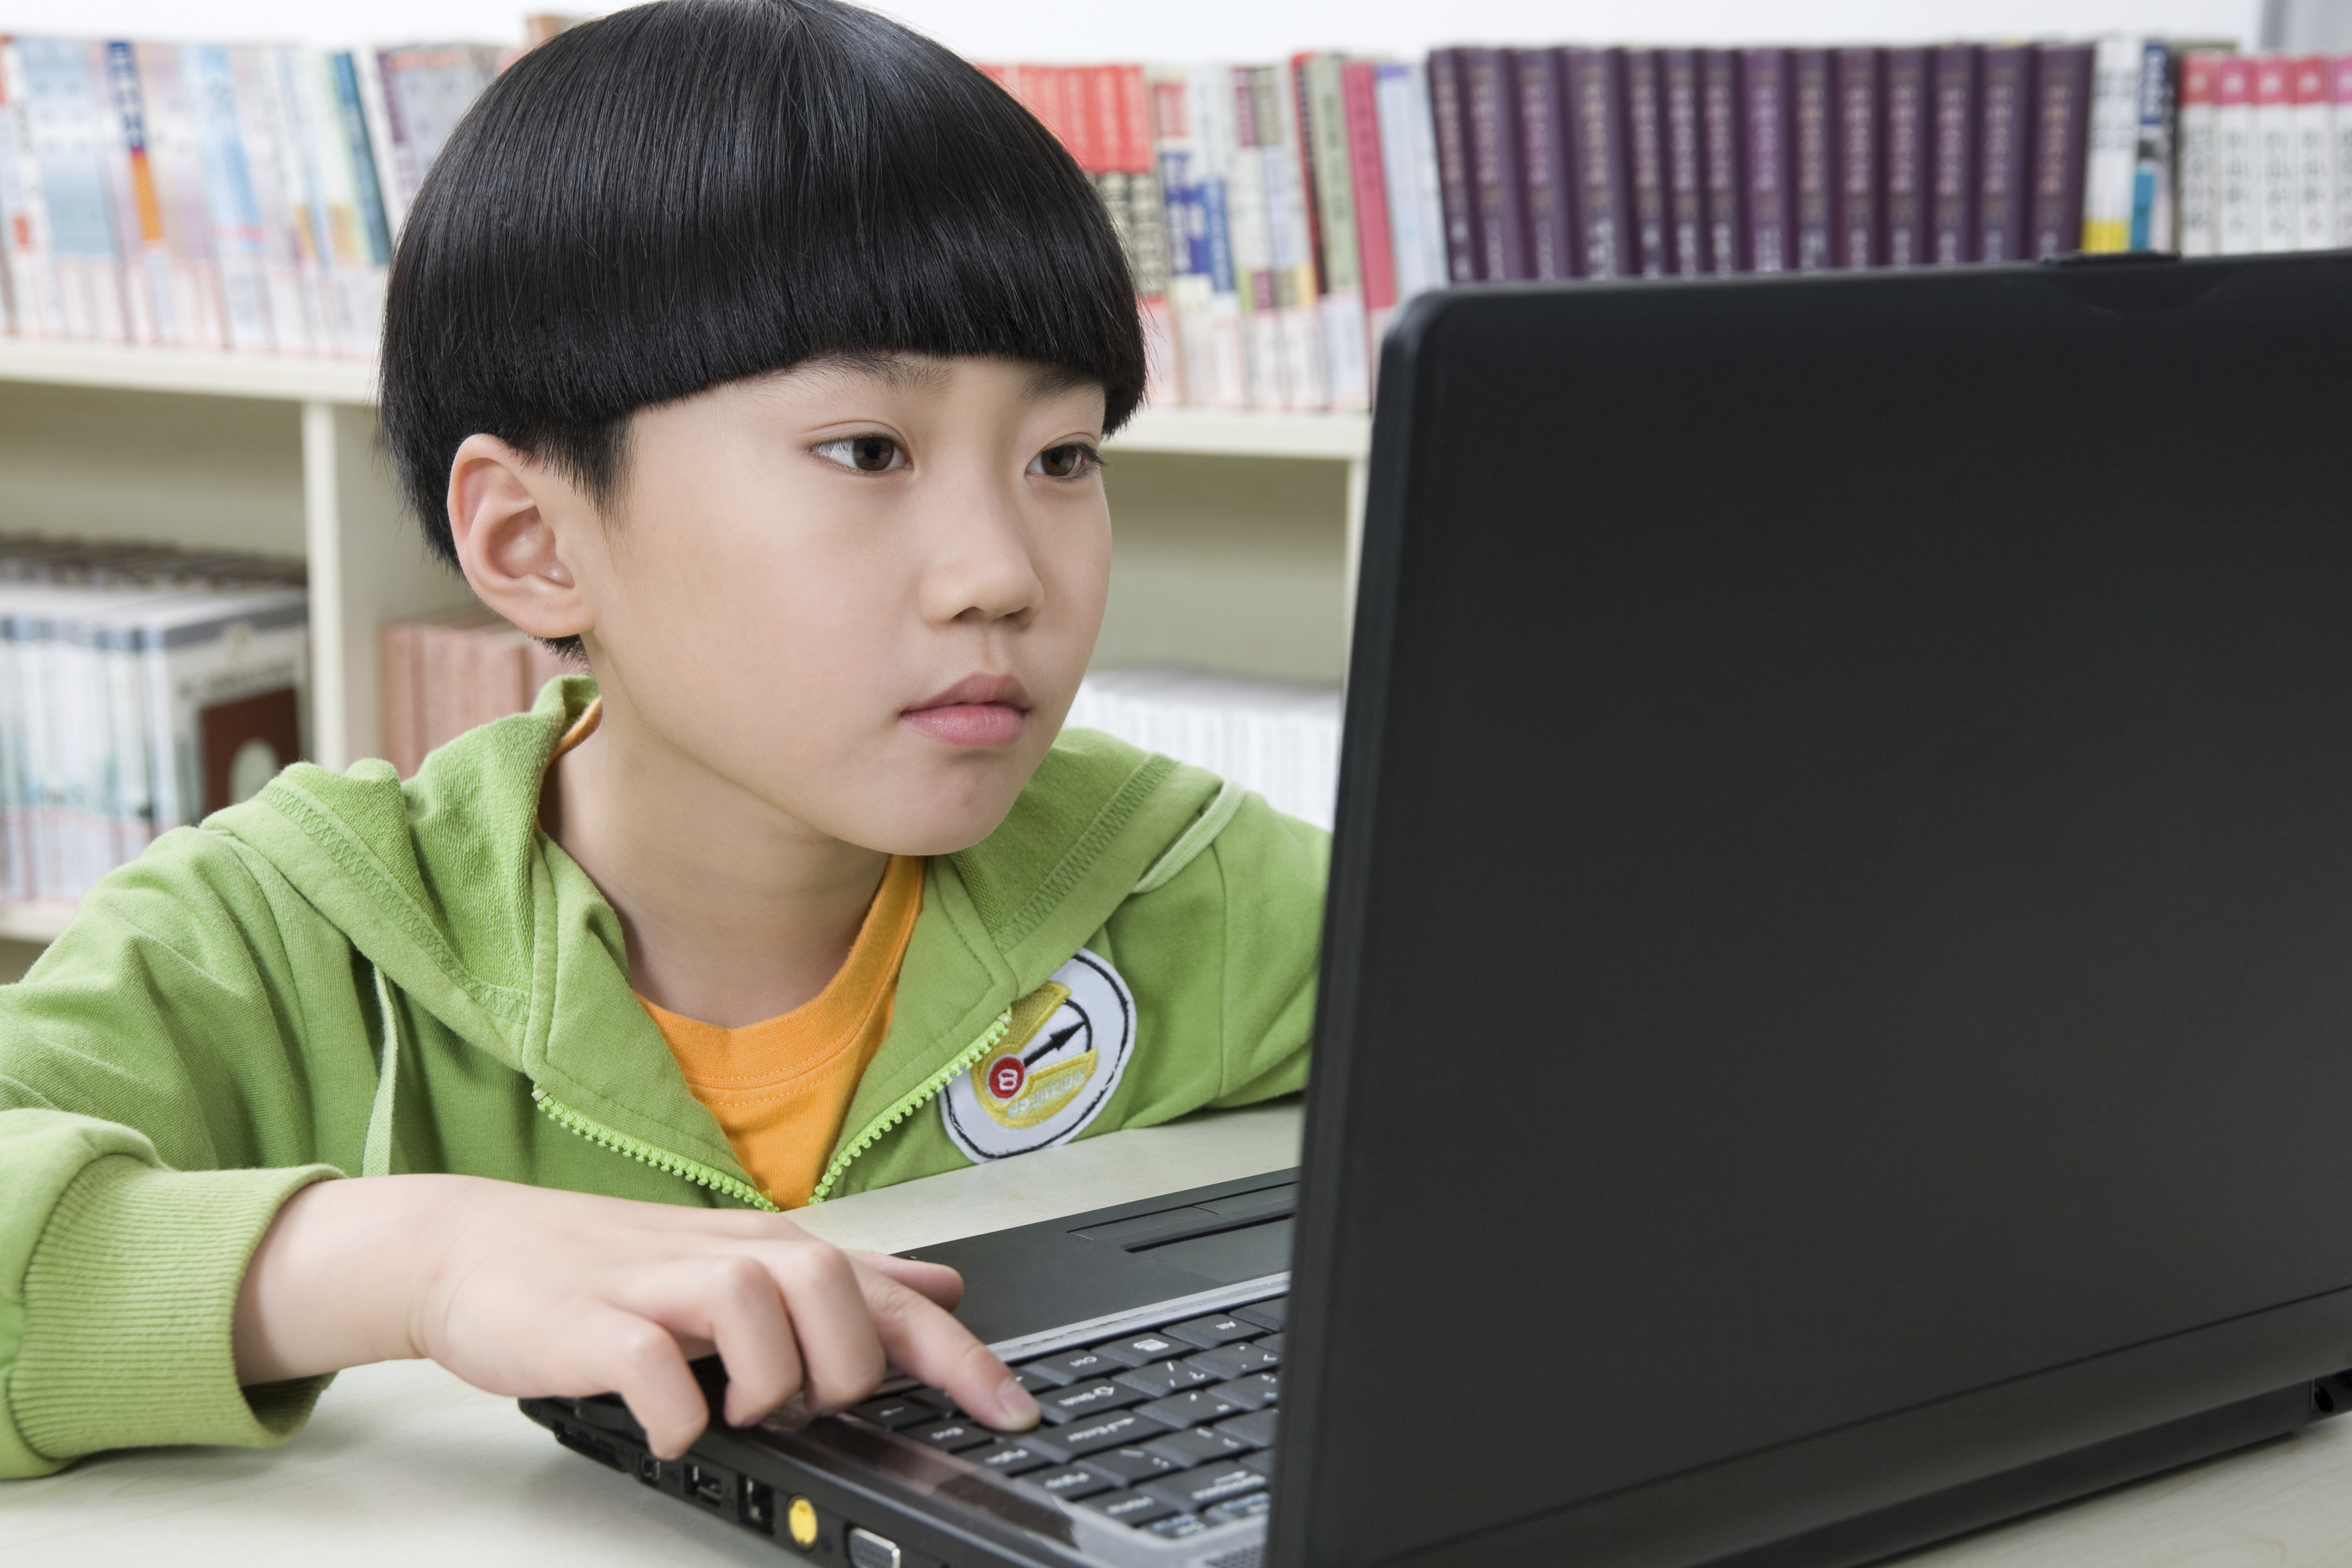  child at computer